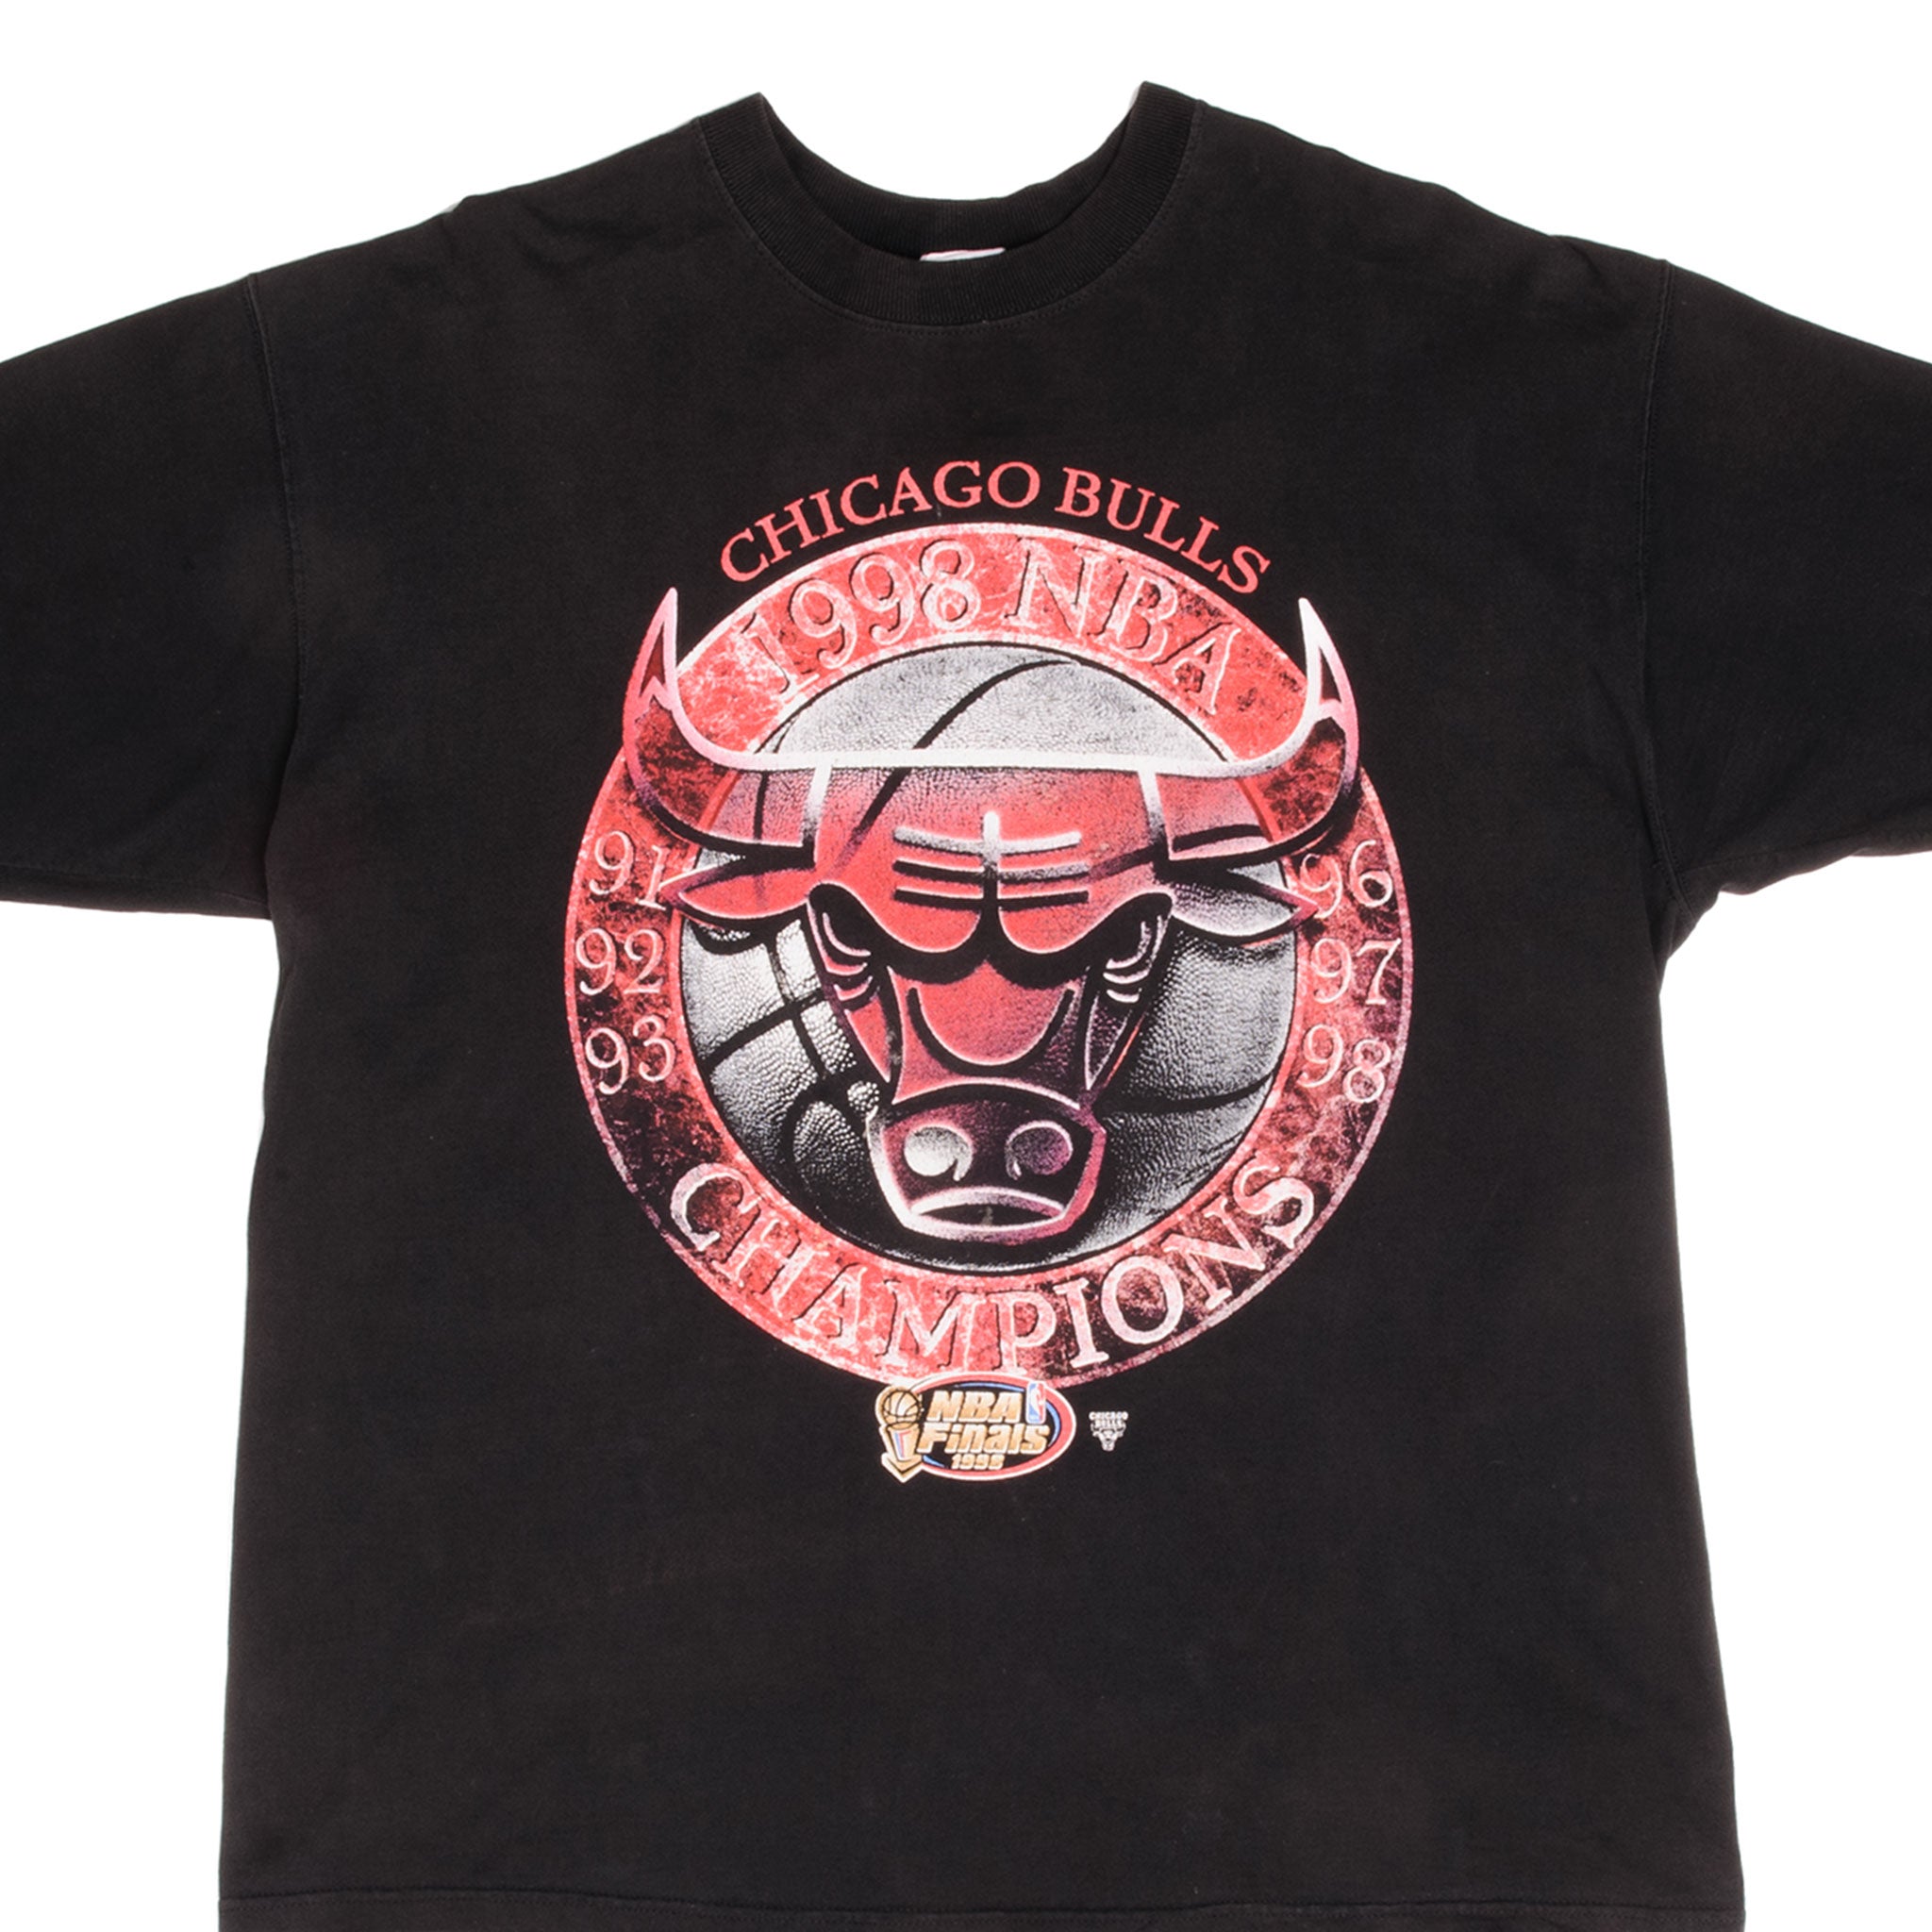 Chicago Bulls NBA Sweatshirts Size XL for sale